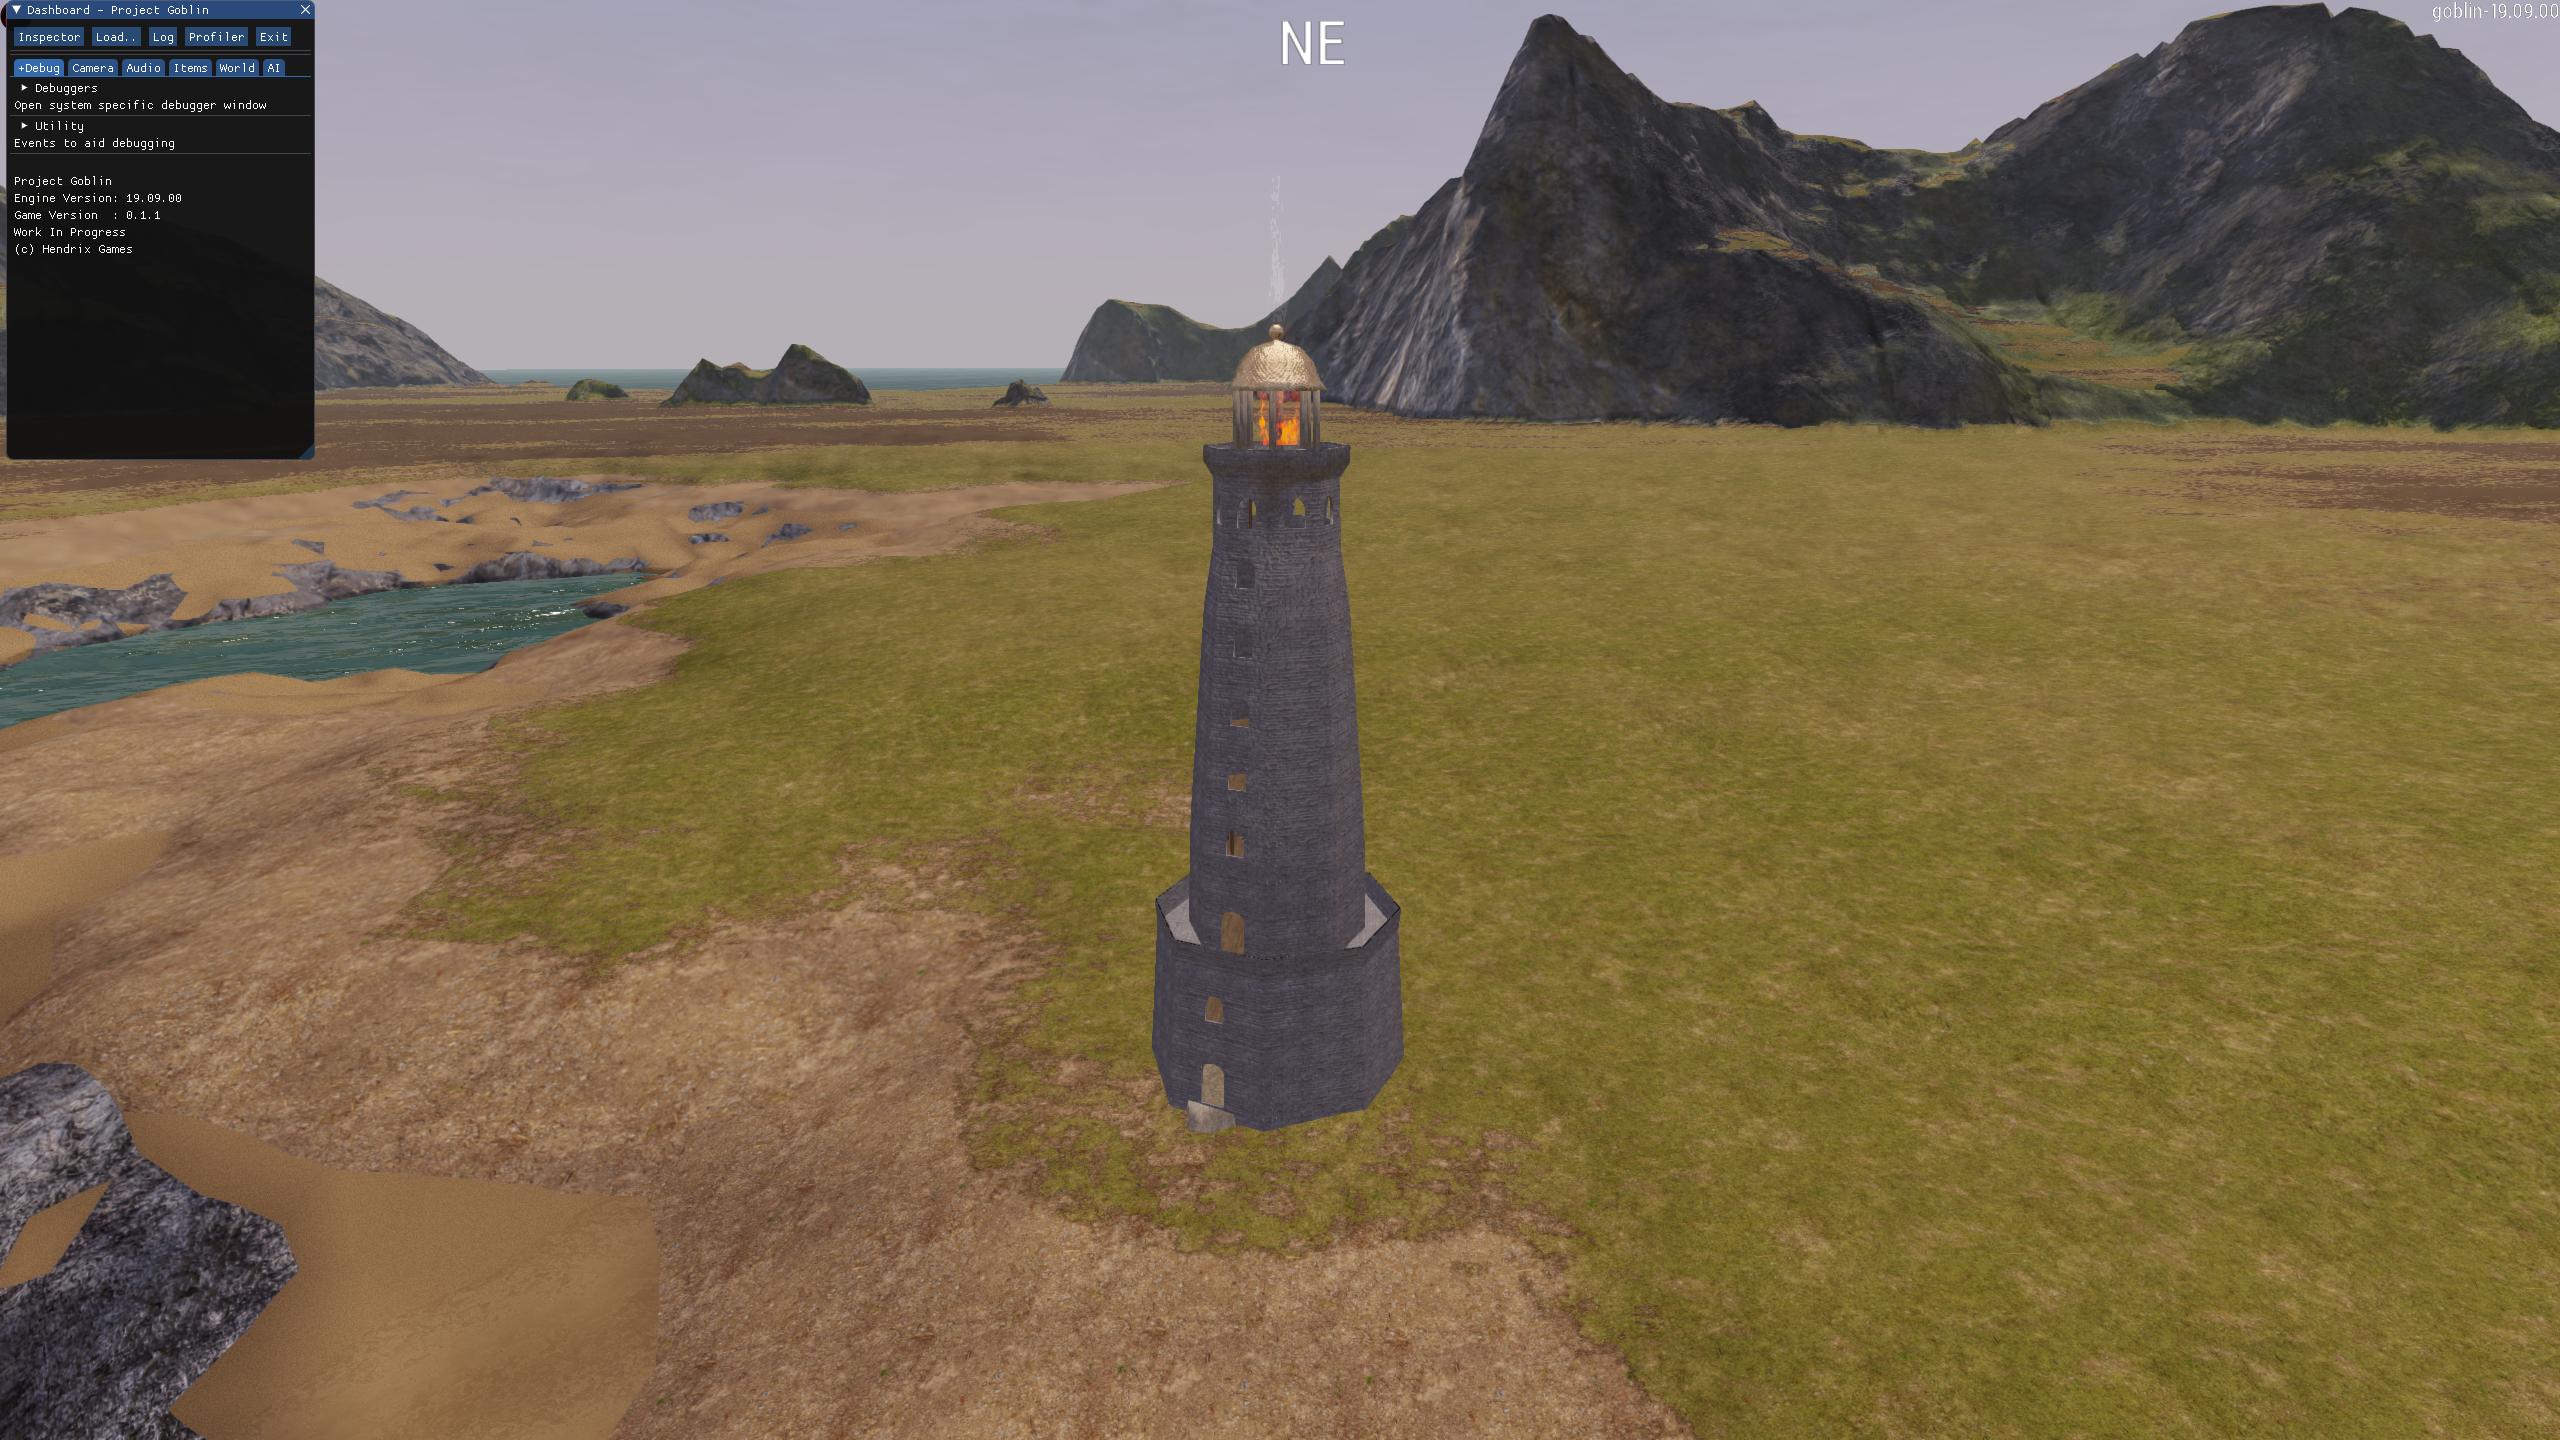 Image of lighthouse on terrain